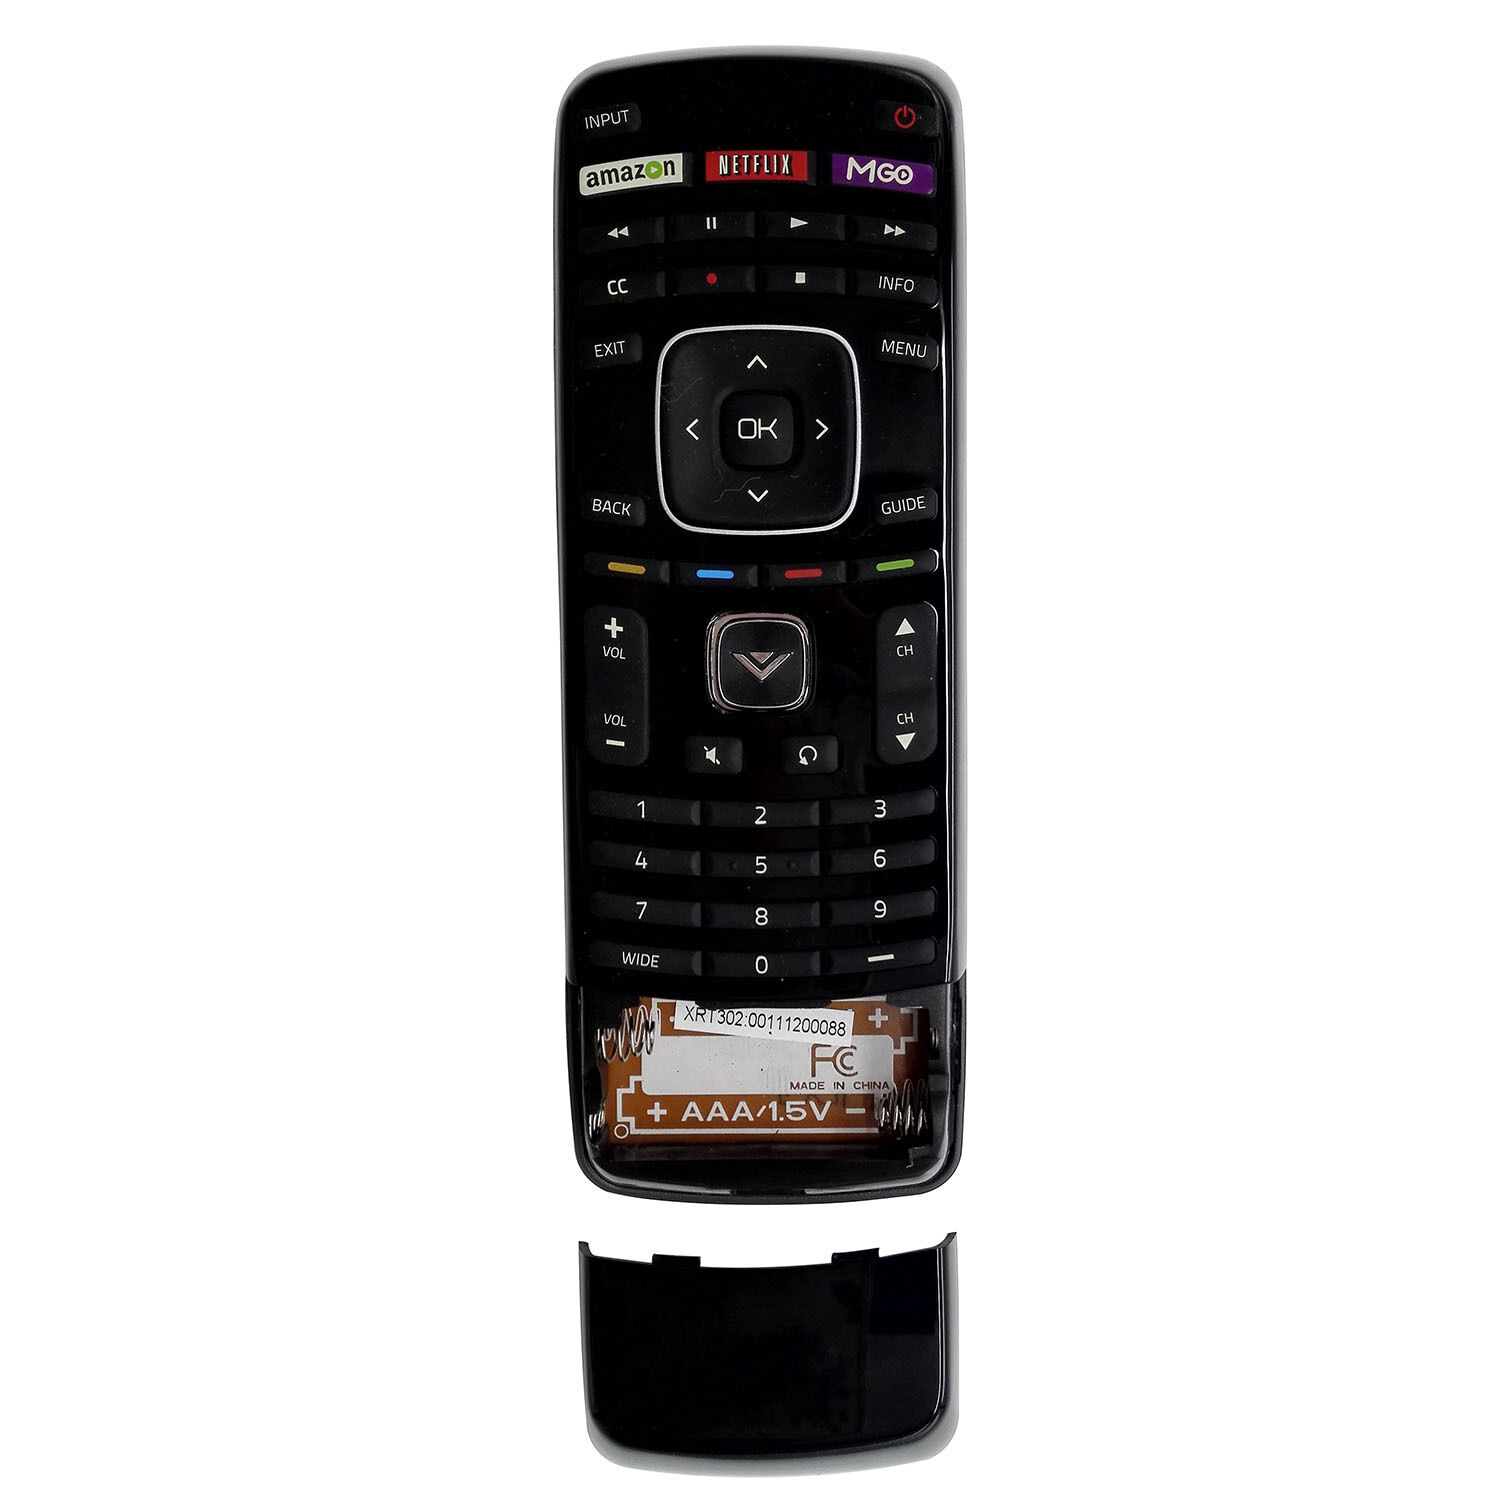 Brand New VIZIO XRT302 (XRT112 keyboard version) Remote for Smart TV with M-GO For-Vizio XRT302 - фотография #3